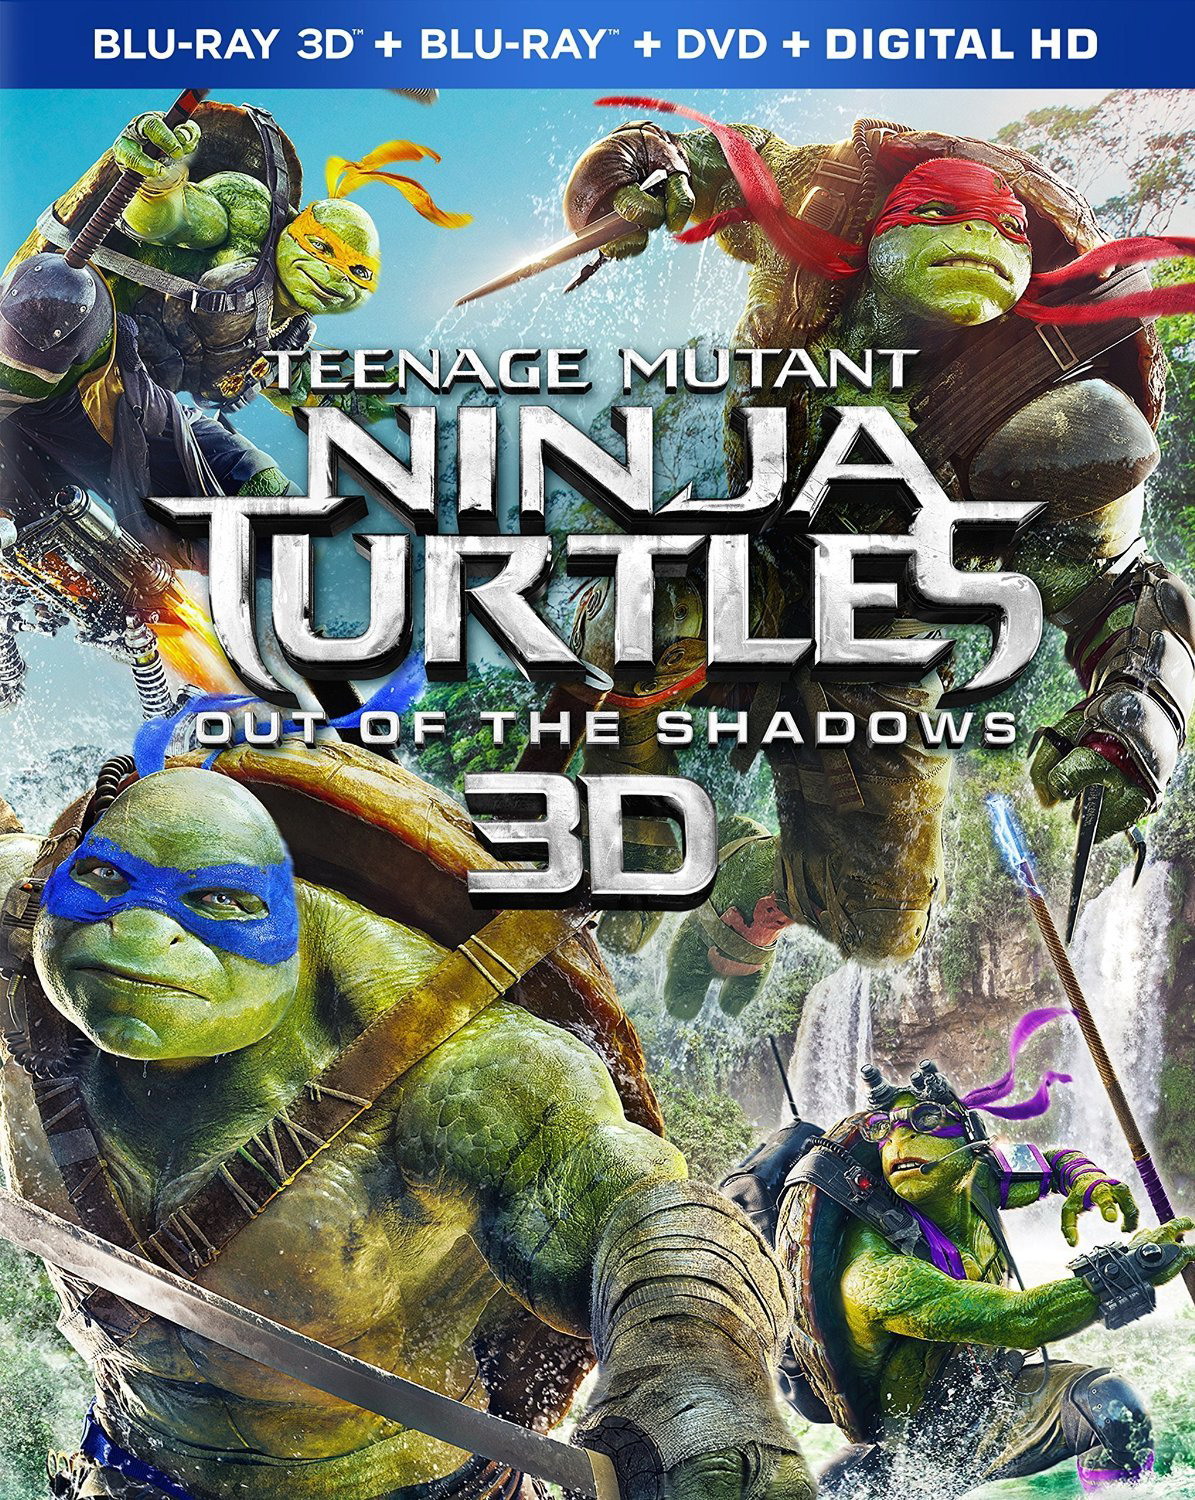 [忍者神龟2].Teenage.Mutant.Ninja.Turtles.Out.of.the.Shadows.2016.UHD.BluRay.2160p.HEVC.TrueHD.7.1-BLUEBIRD   57.63G-2.jpg